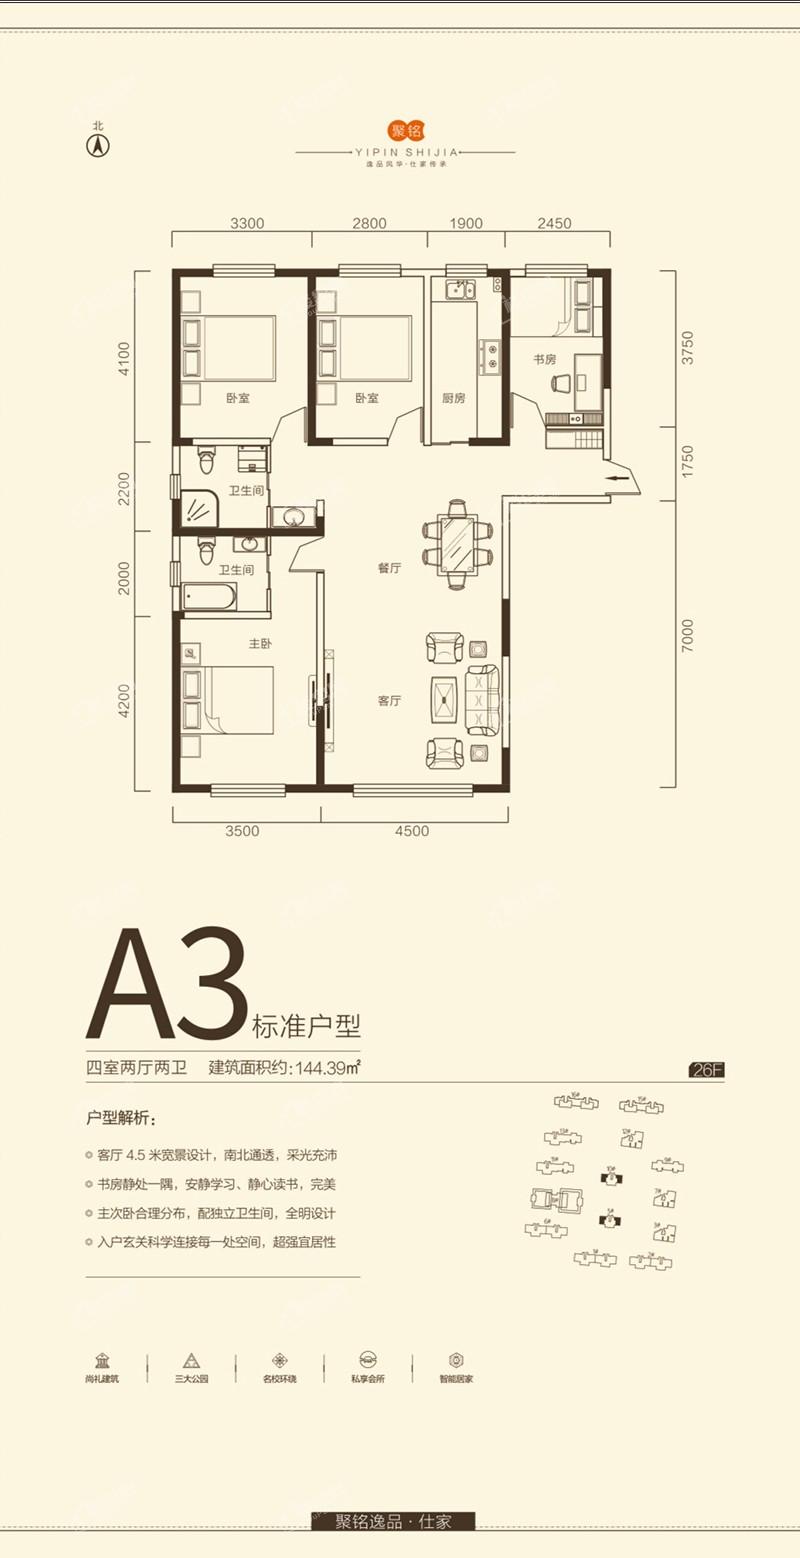 A3户型-四室两厅两卫-144.39平米